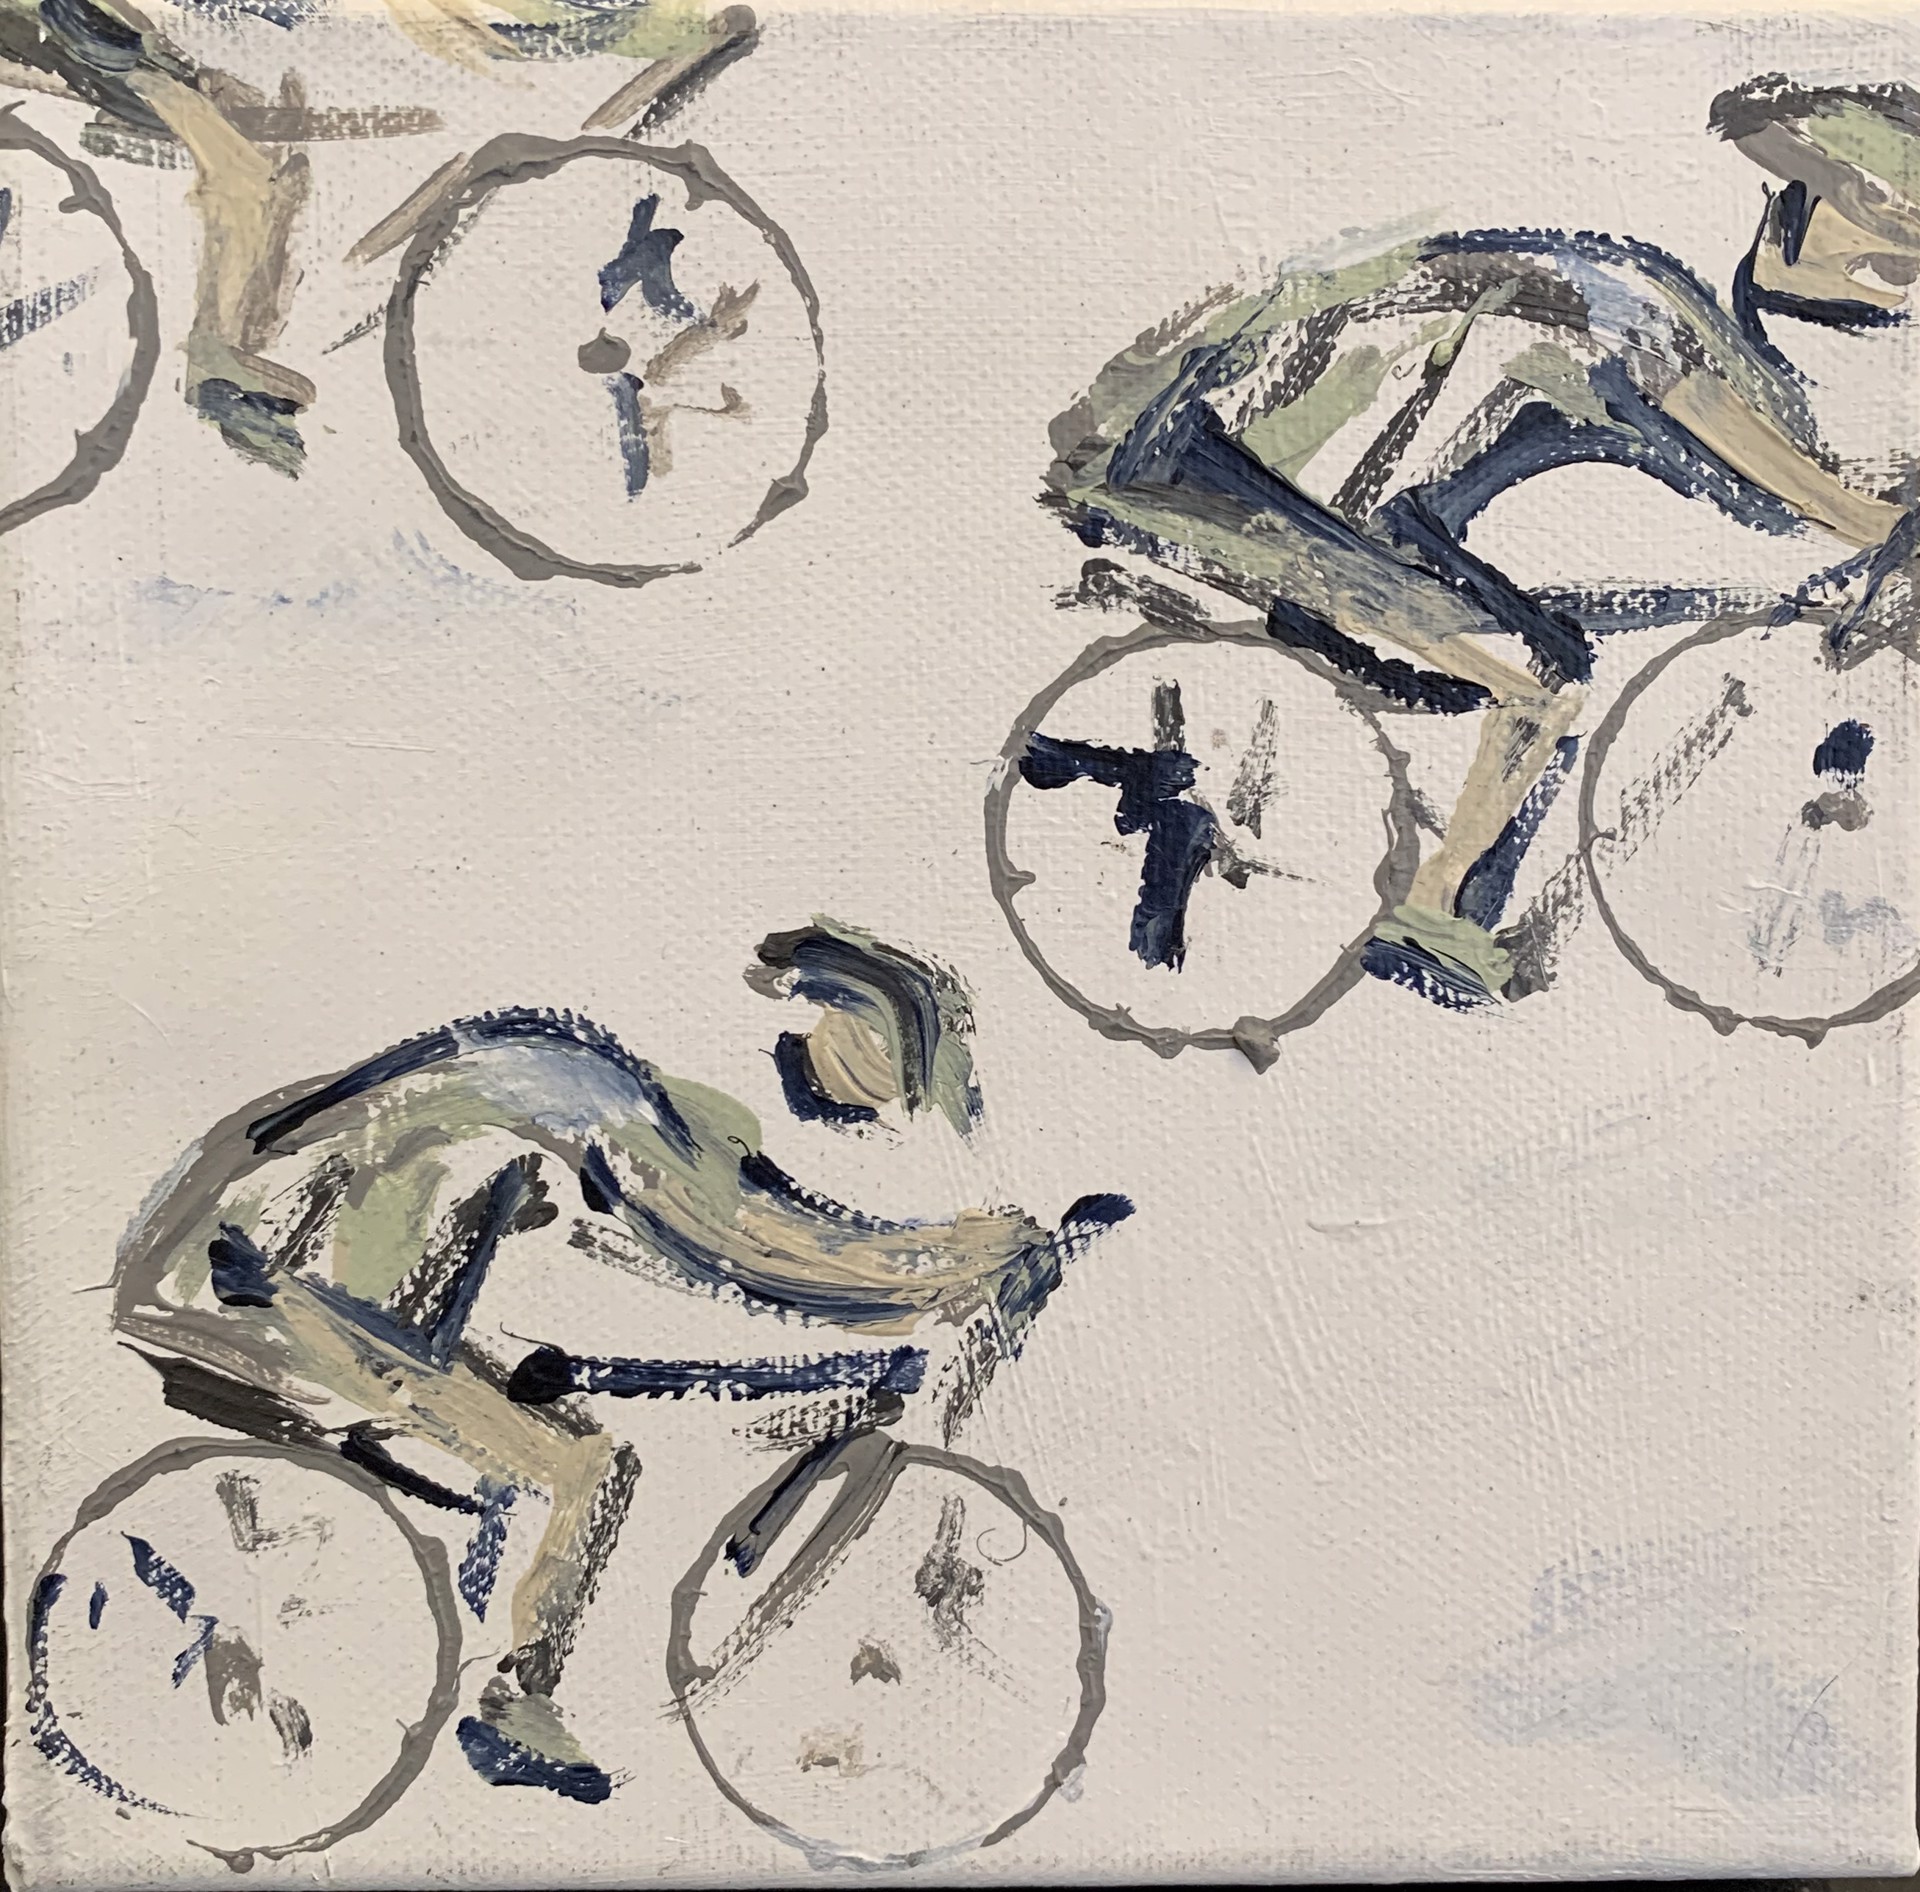 Bikers by Heather Blanton